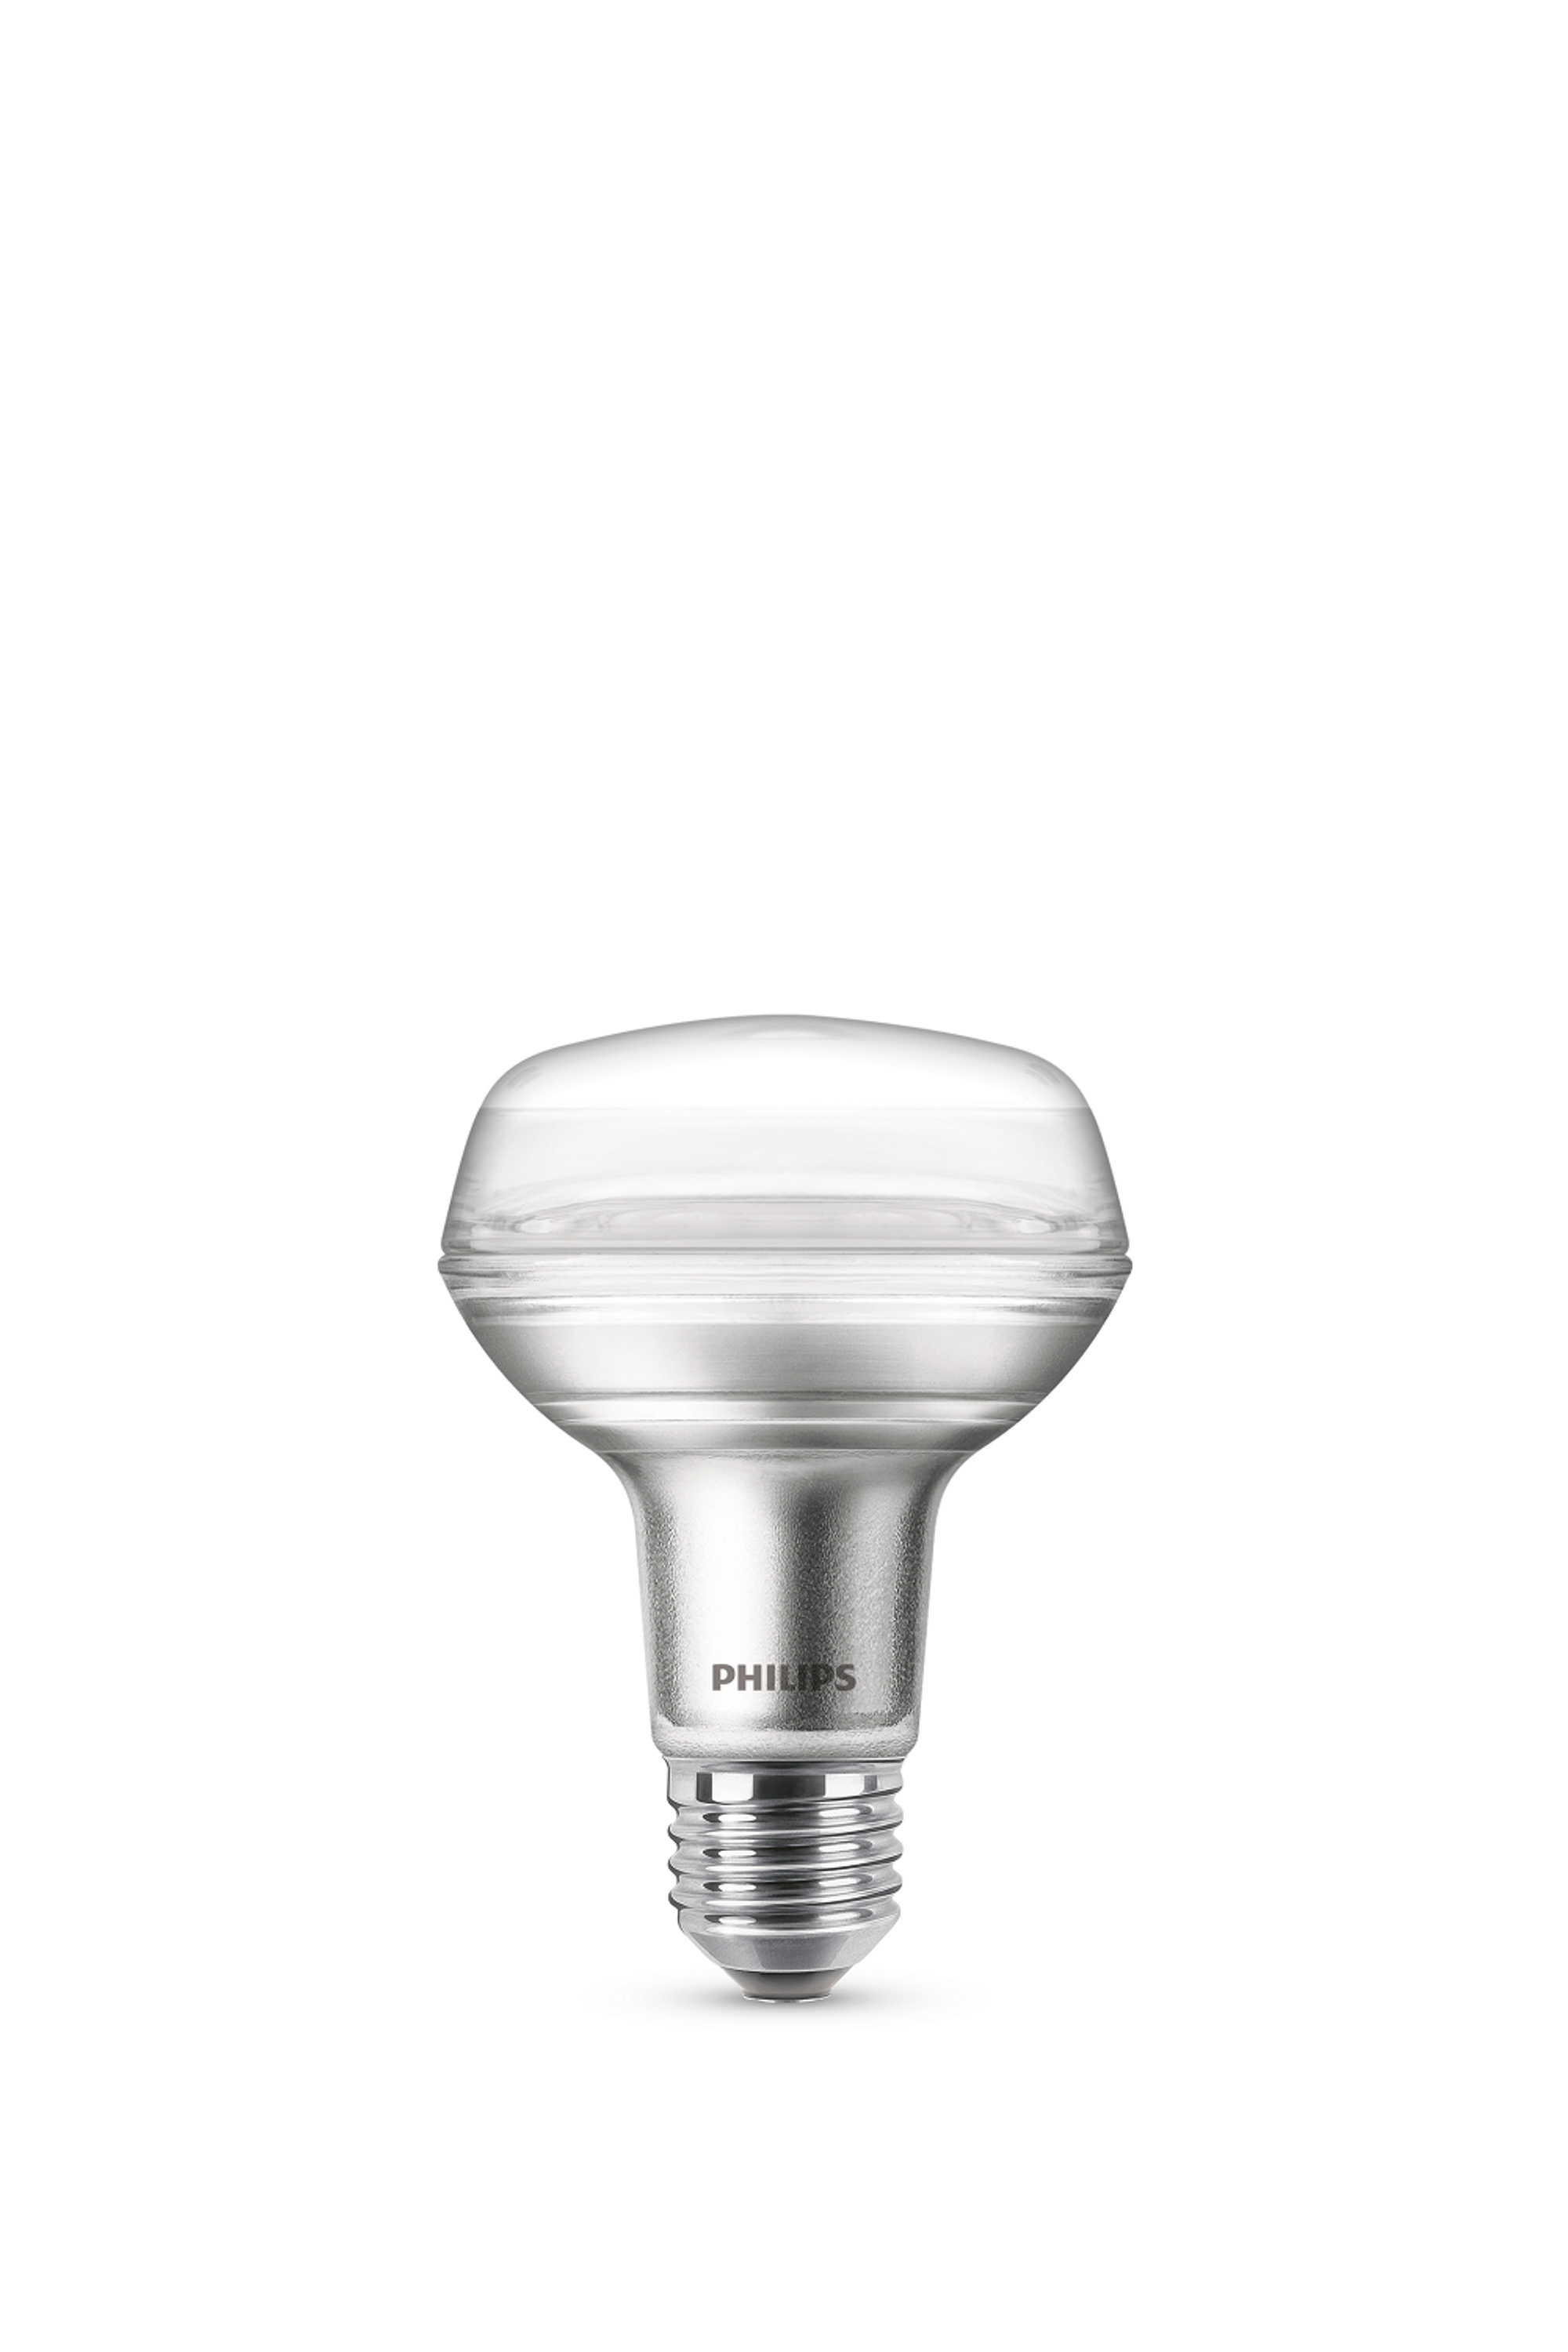 Philips LED Lampe ersetzt 100W, E27 Reflektor